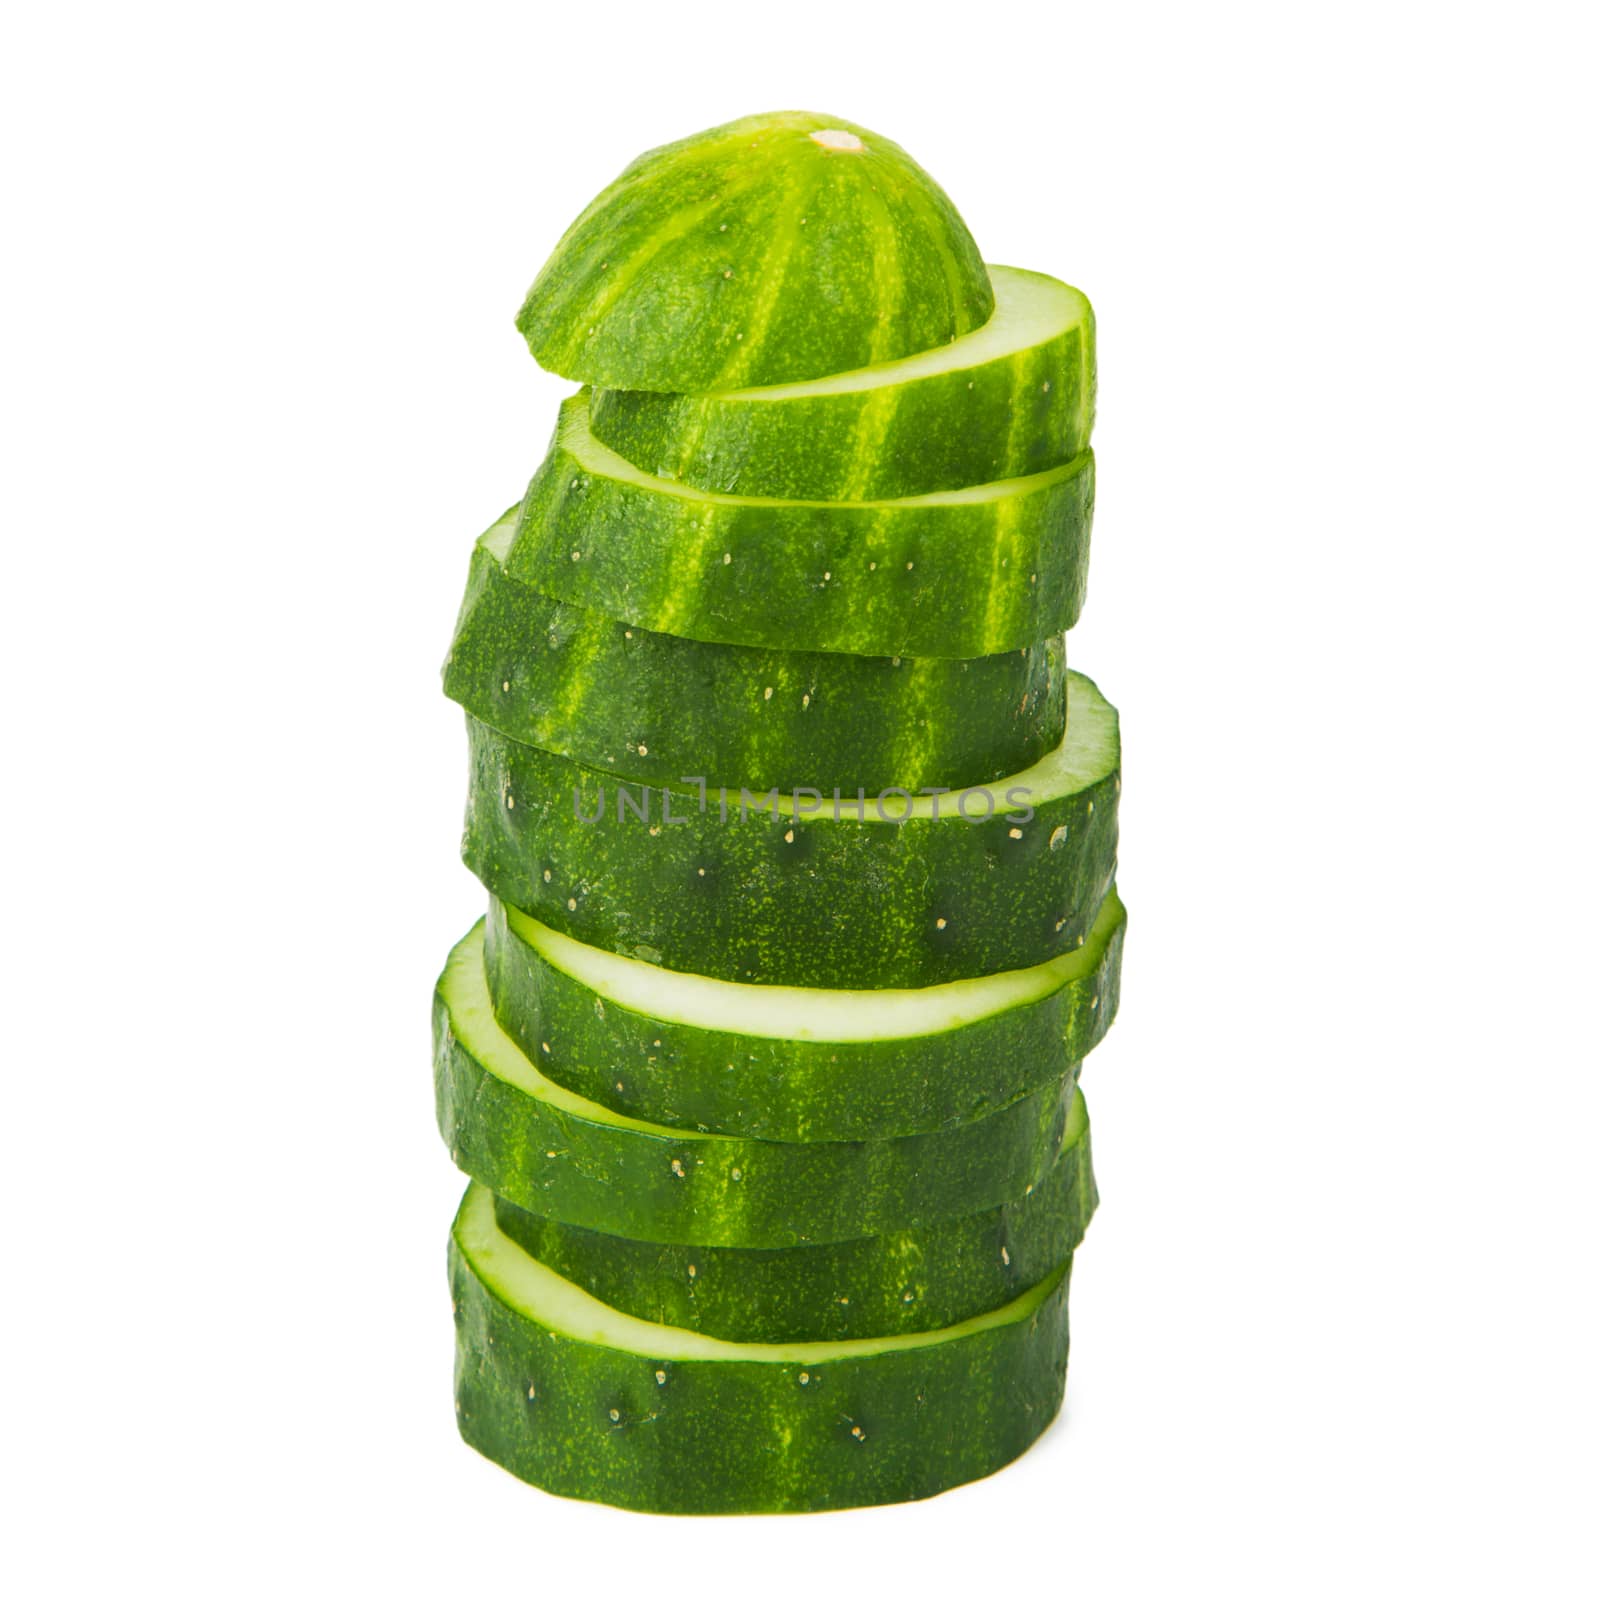 Cucumber by grigorenko